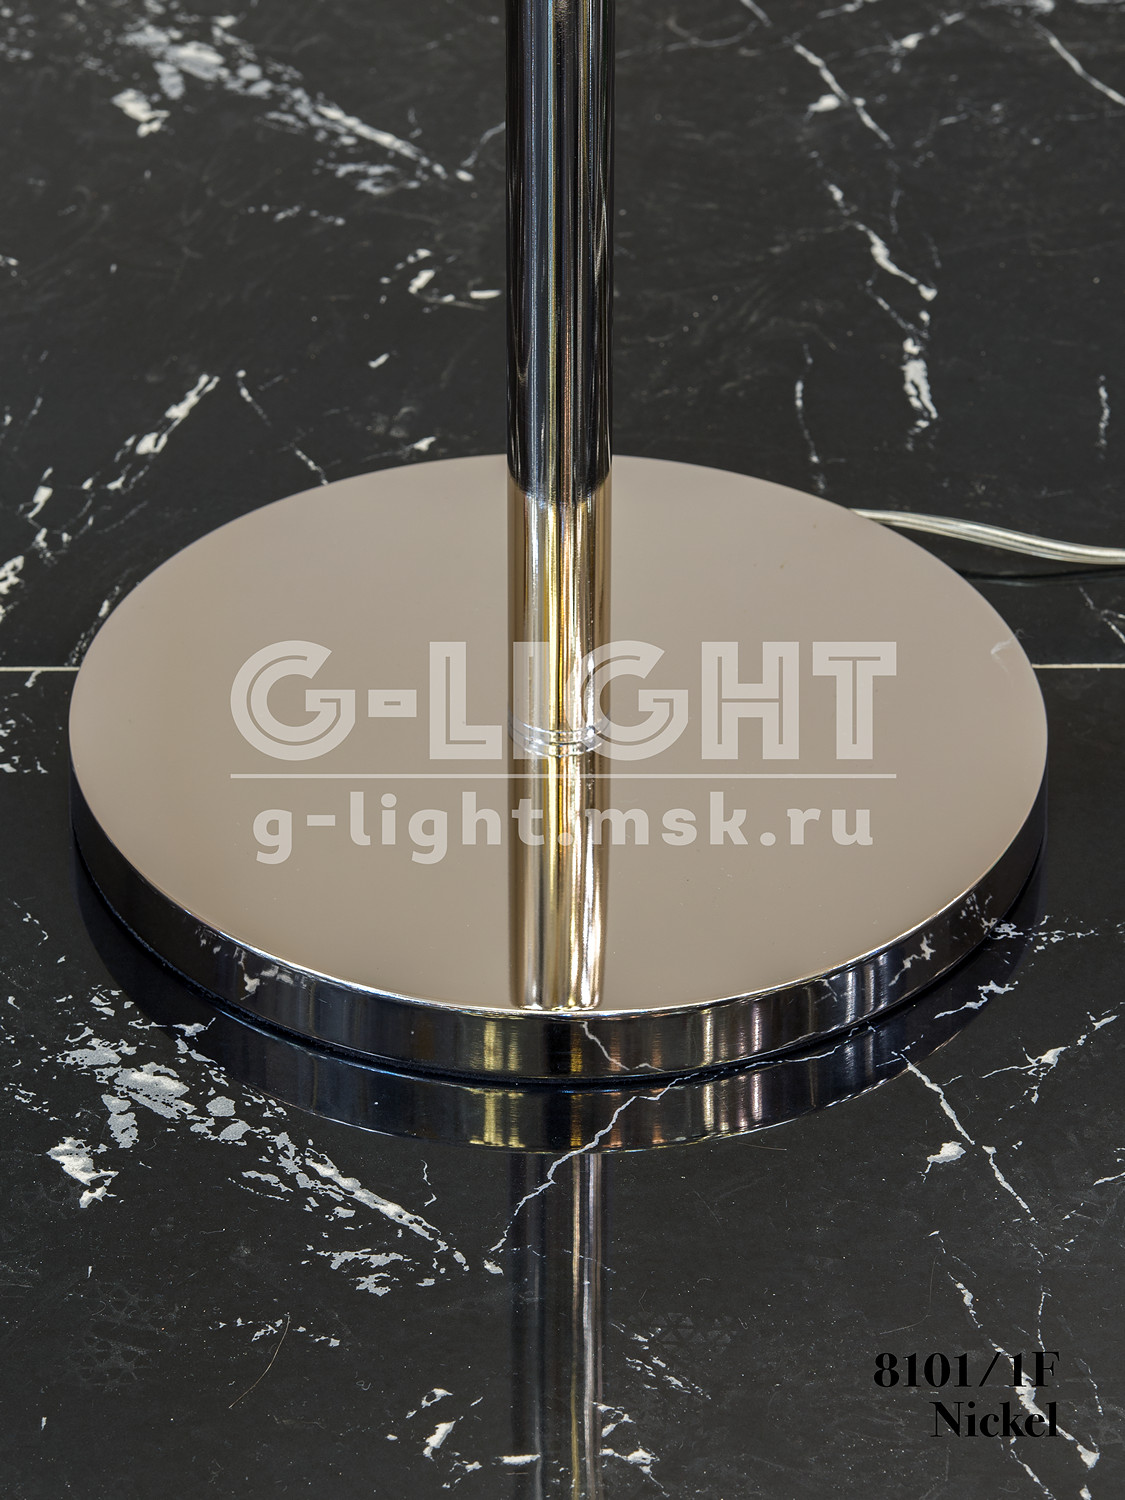 Торшер G-Light 8101/1F Nickel - изображение 2